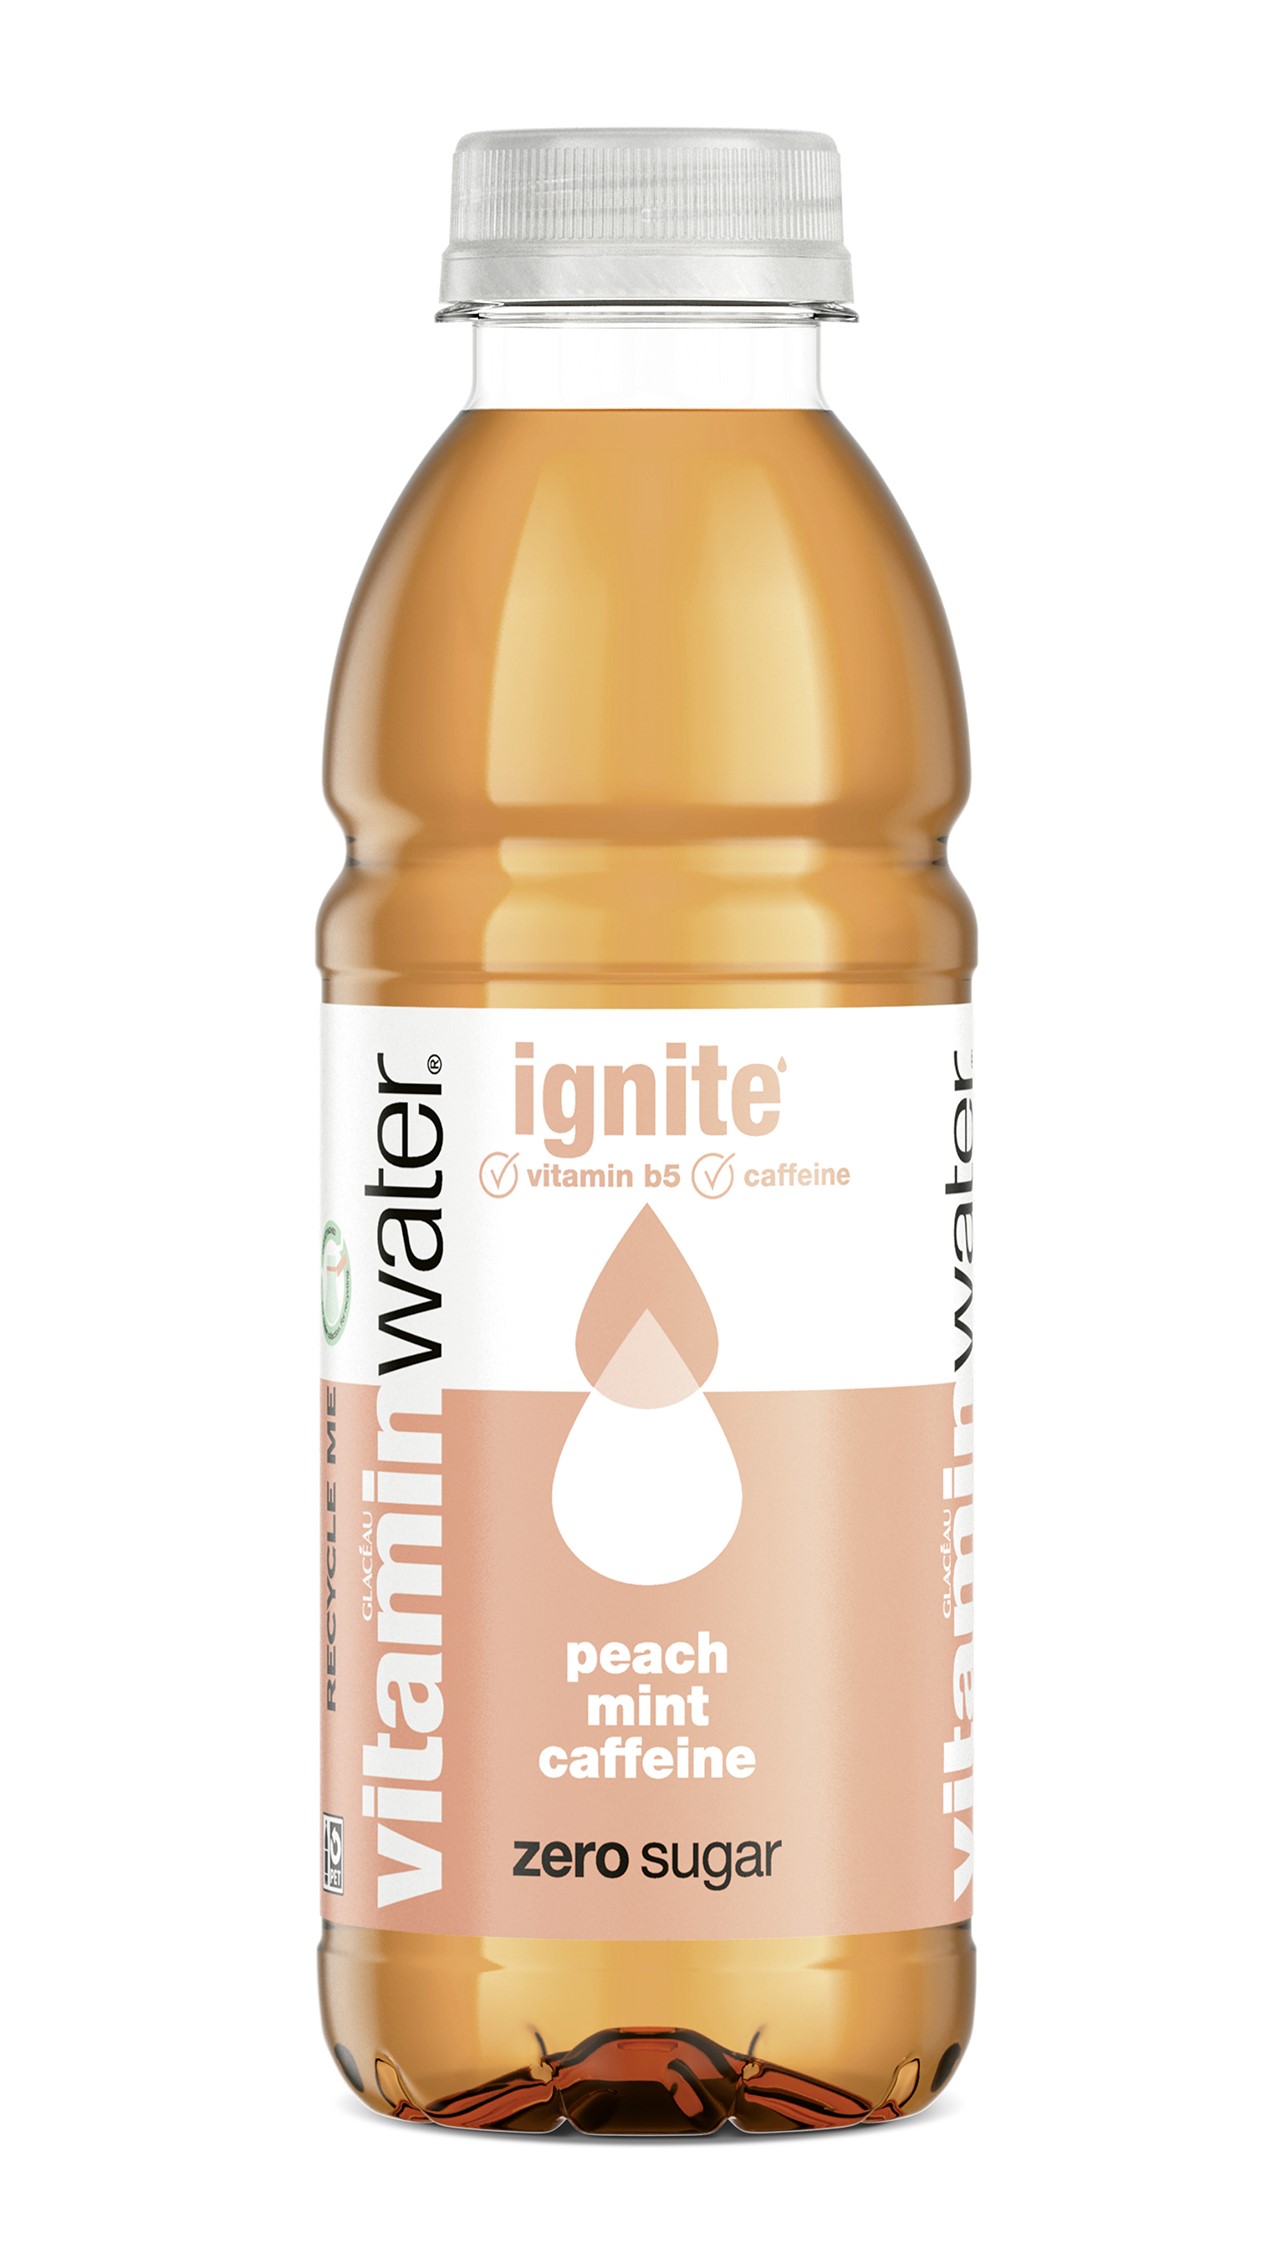 bouteille de vitaminwater ignite